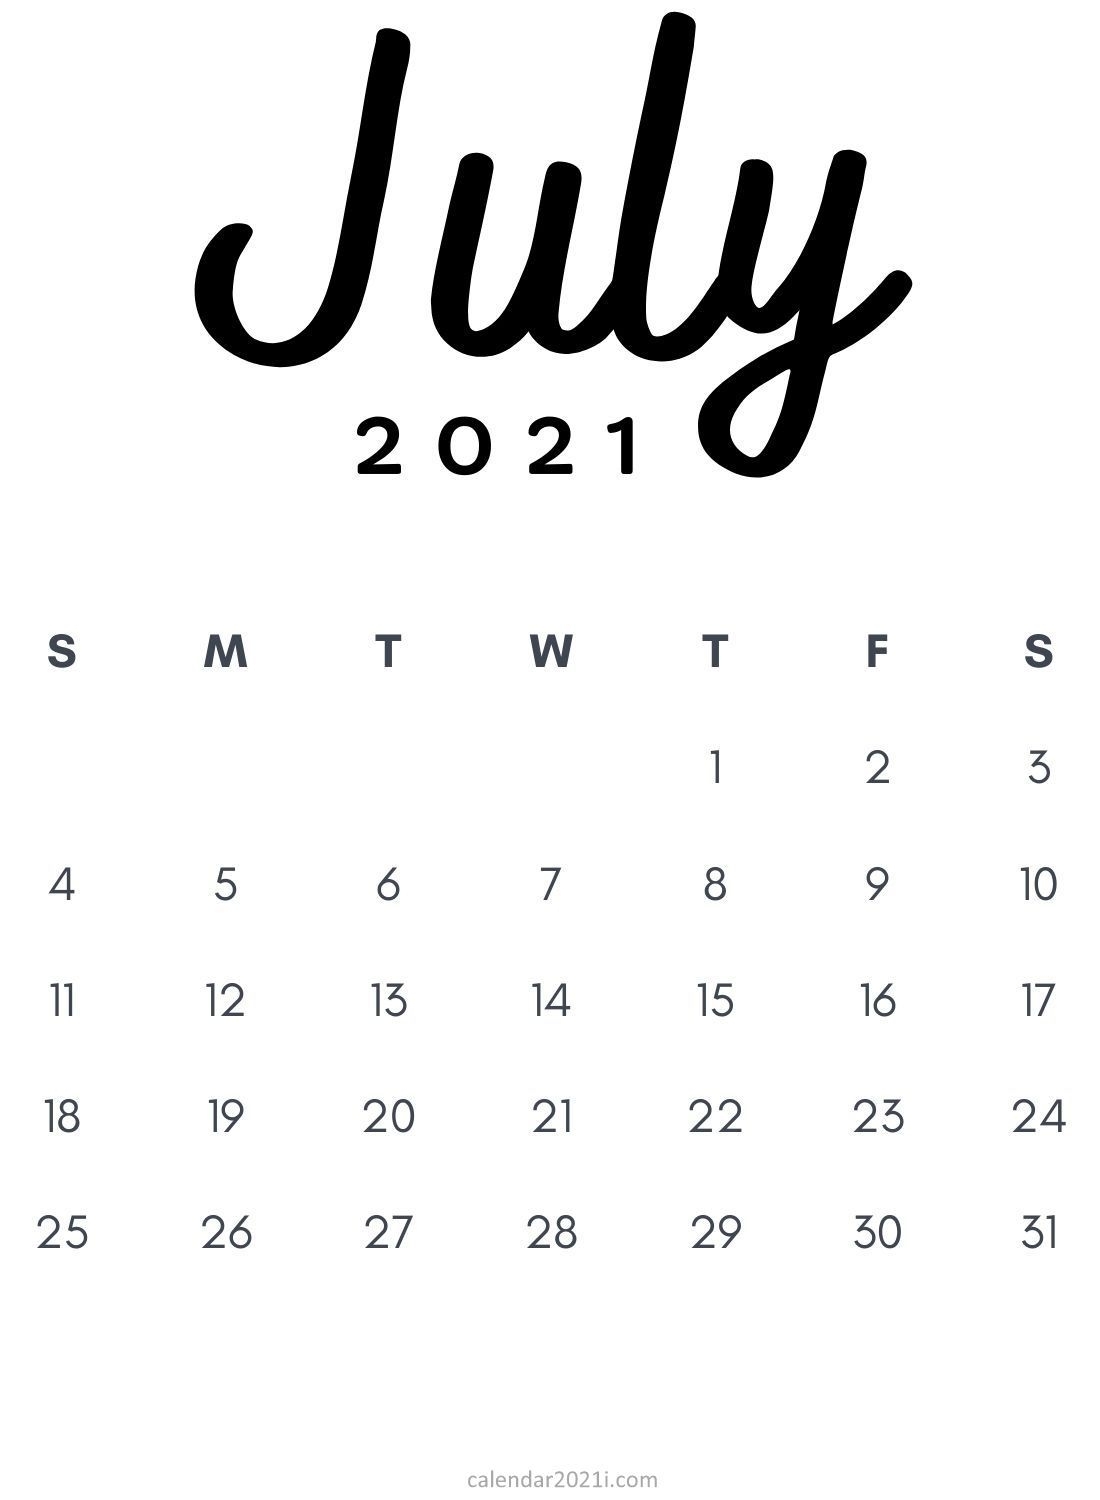 Collect July 2021 Disney Calendar Downloadable